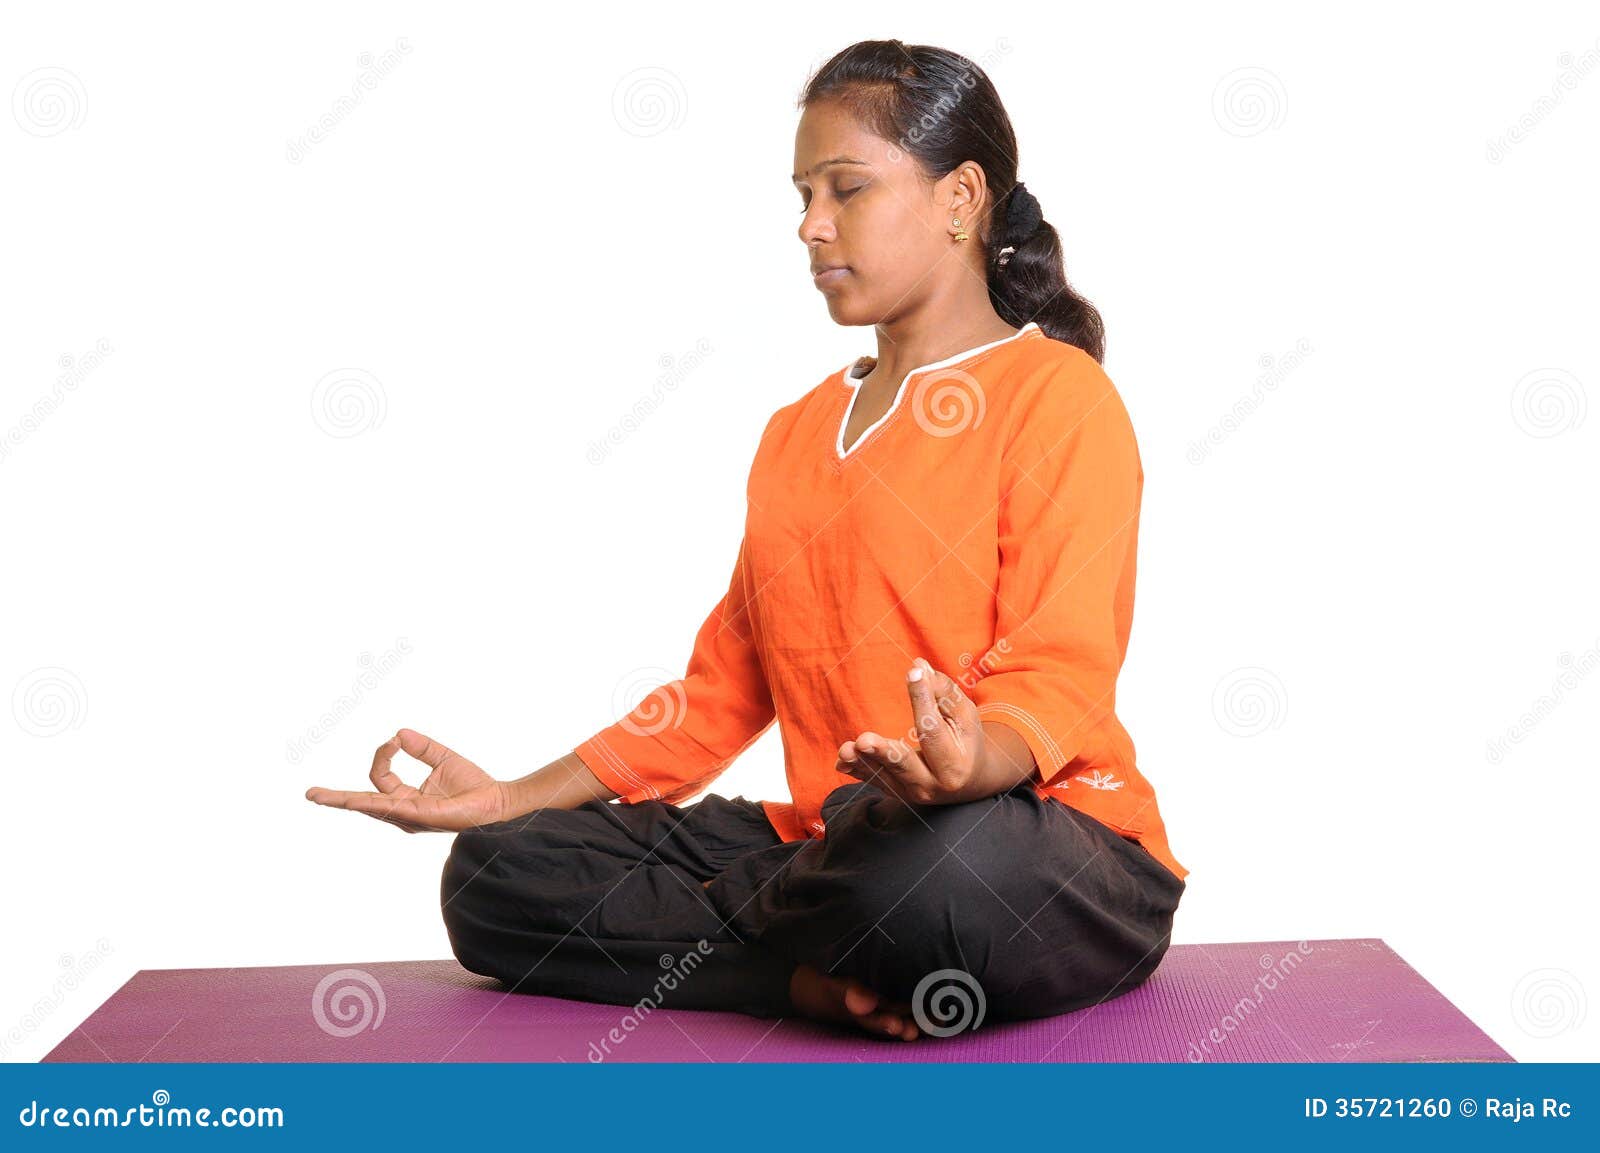 Woman doing yoga pose Free Stock Photos, Images, and Pictures of Woman  doing yoga pose